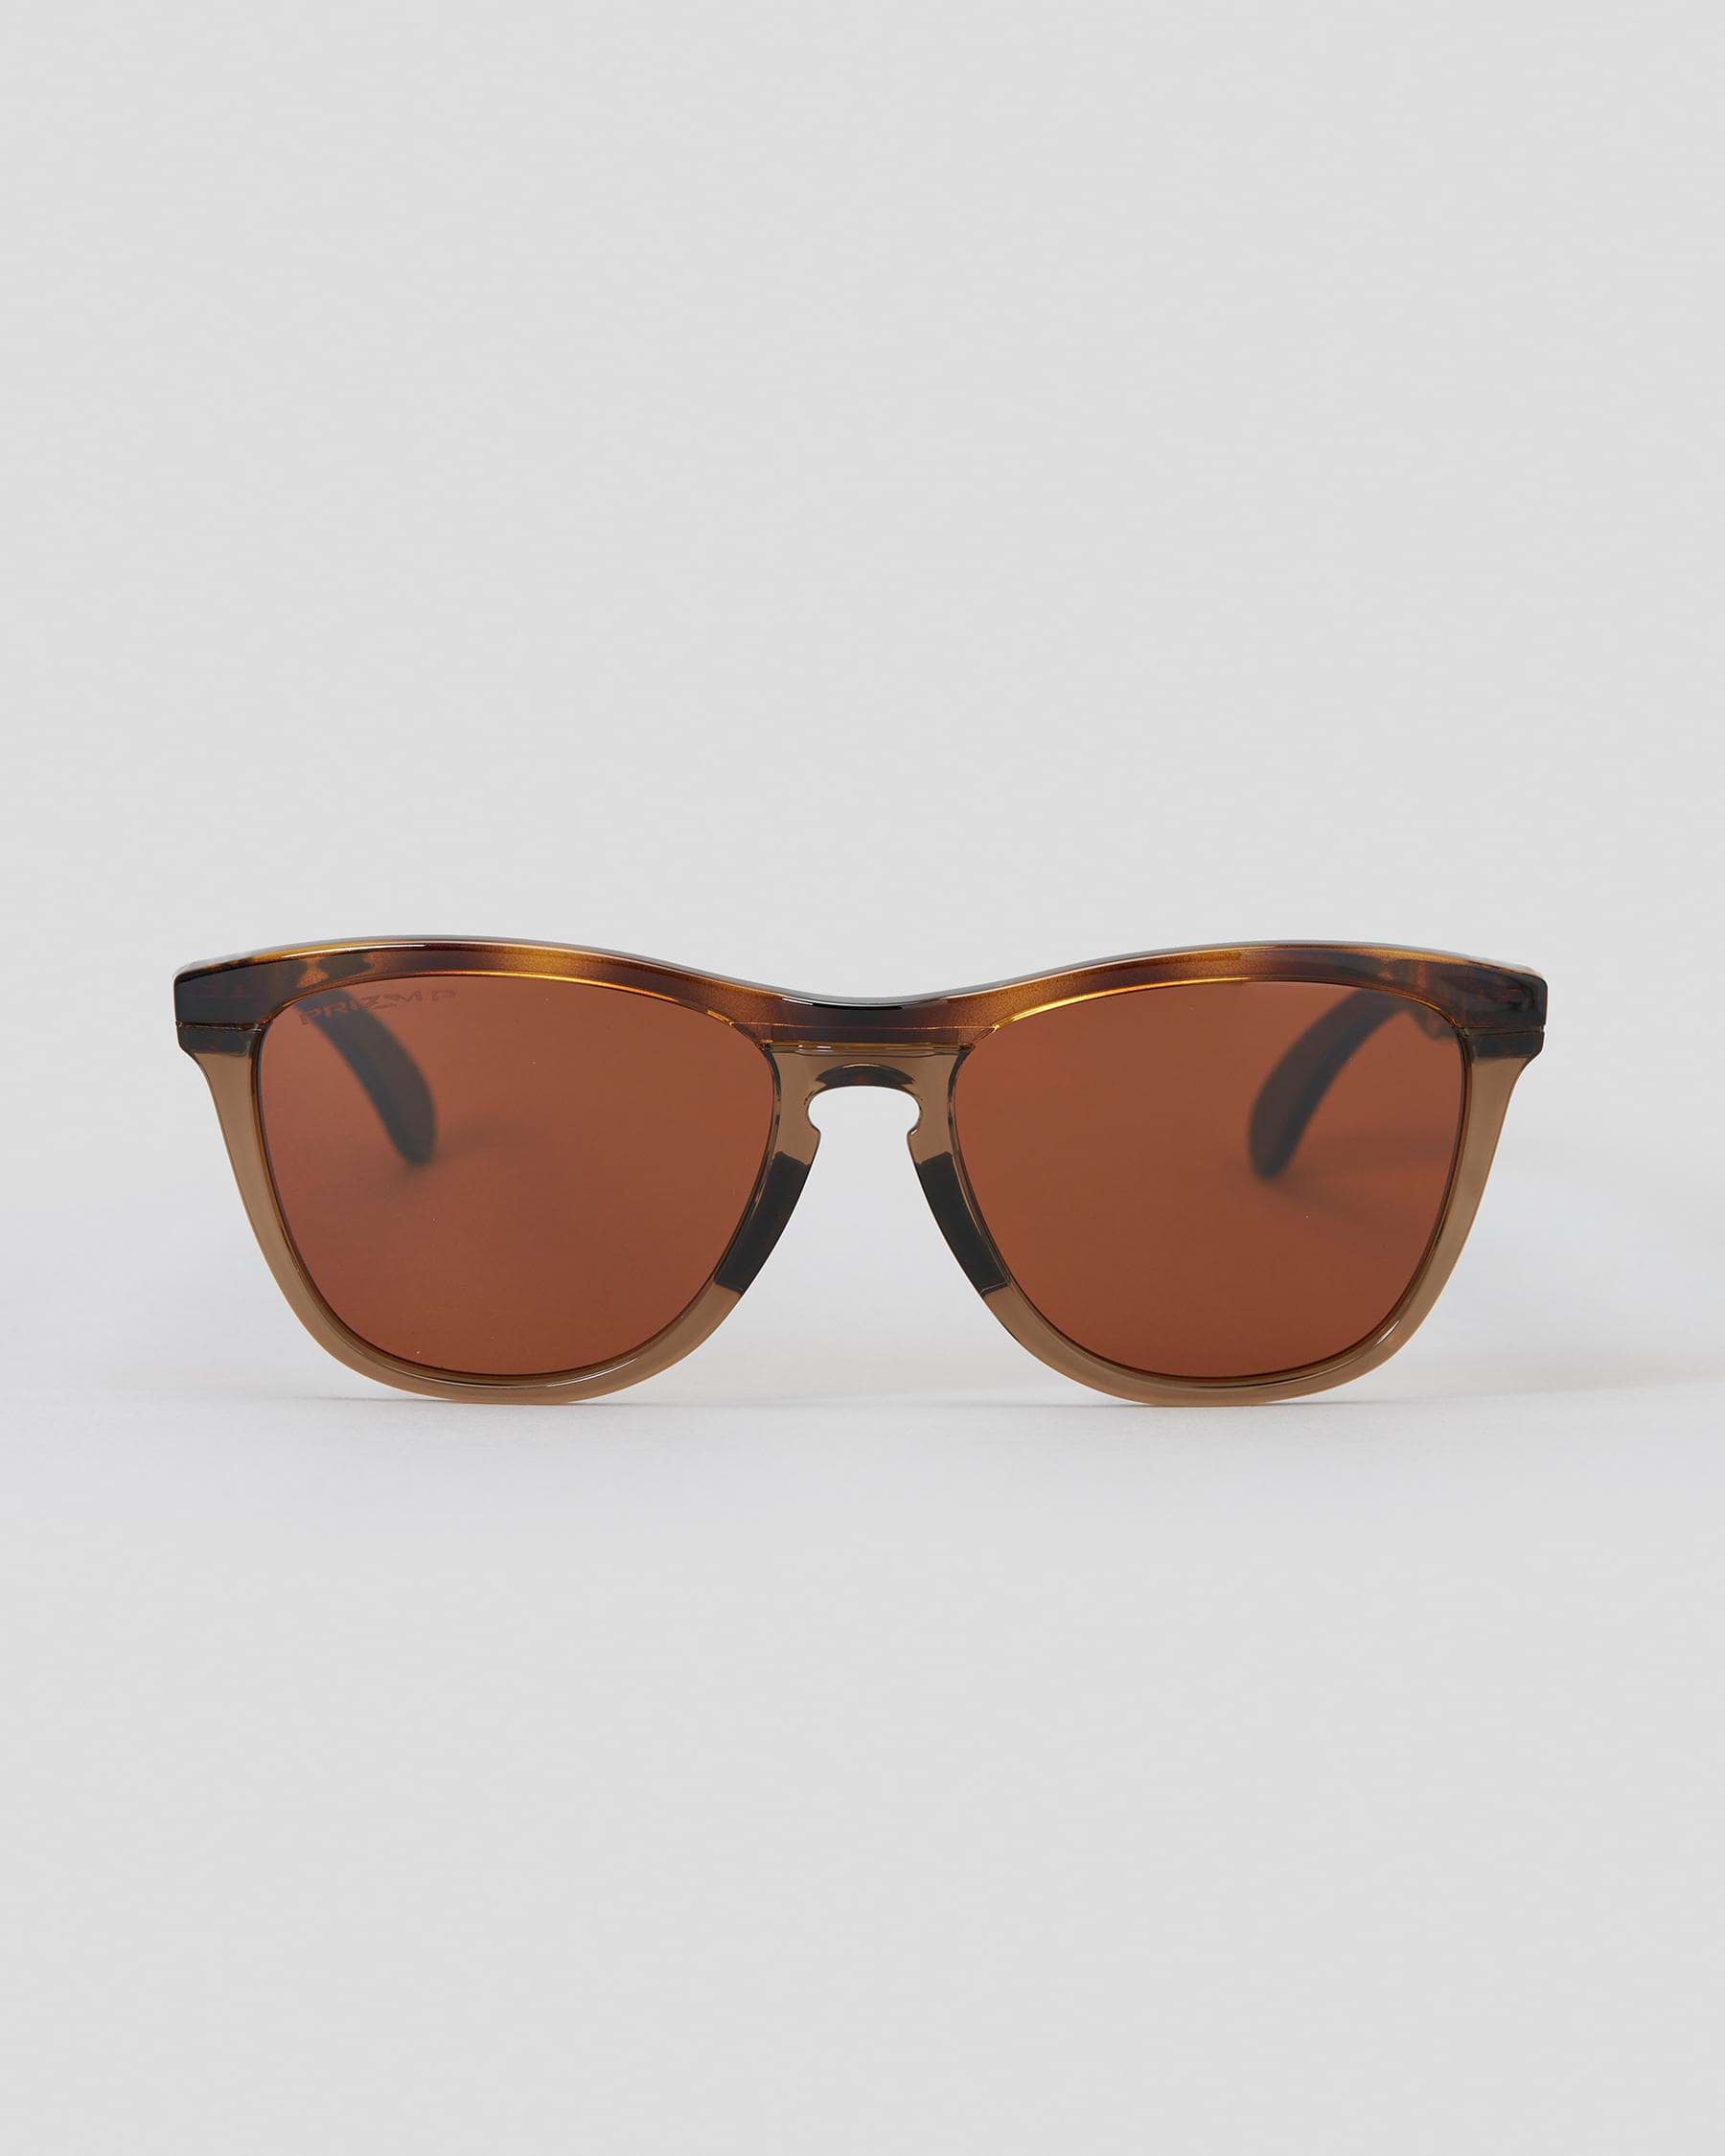  Oakley OO9284 Frogskins Range Round Sunglasses, Brown  Tortoise/Brown Smoke/Prizm Tungsten Polarized, 55 mm : Sports & Outdoors